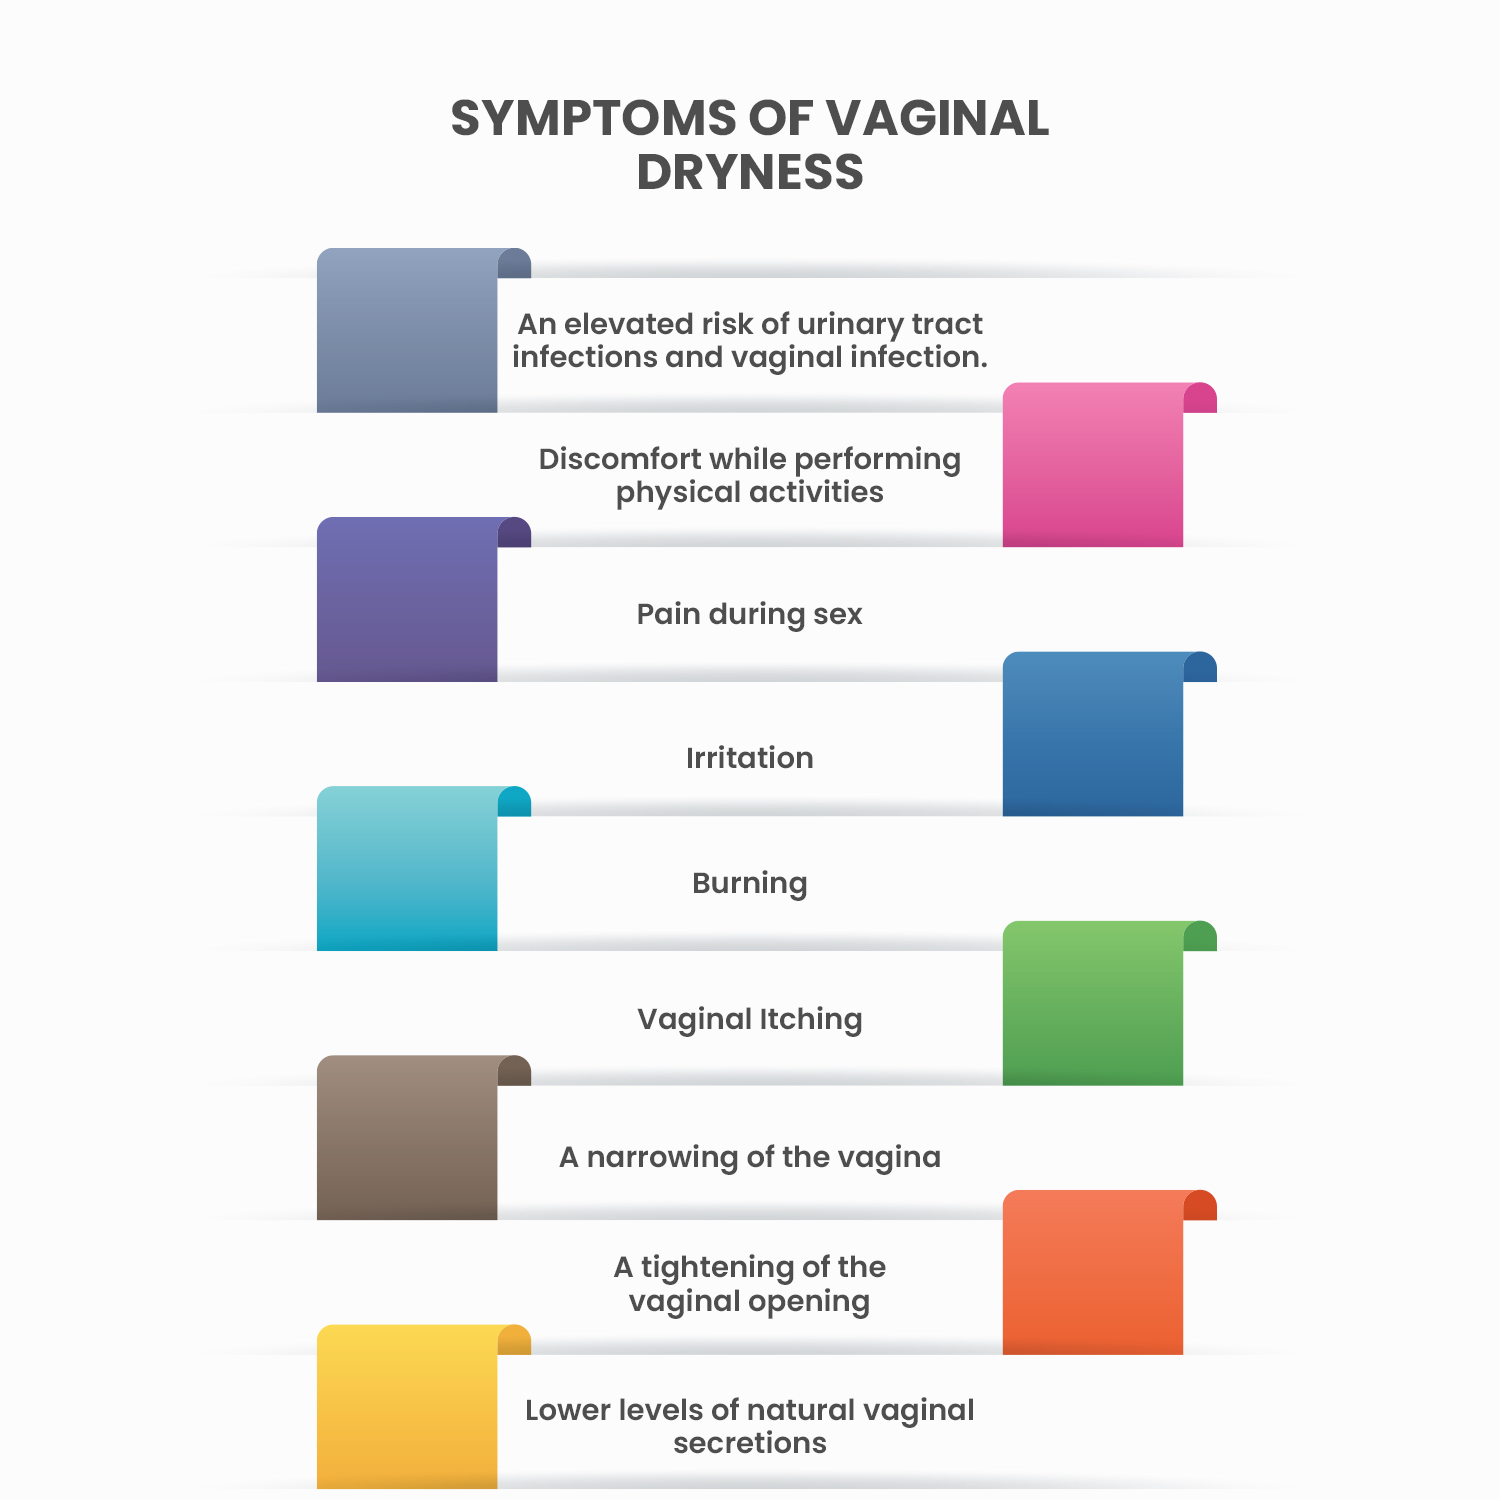 Symptoms of Vaginal Dryness